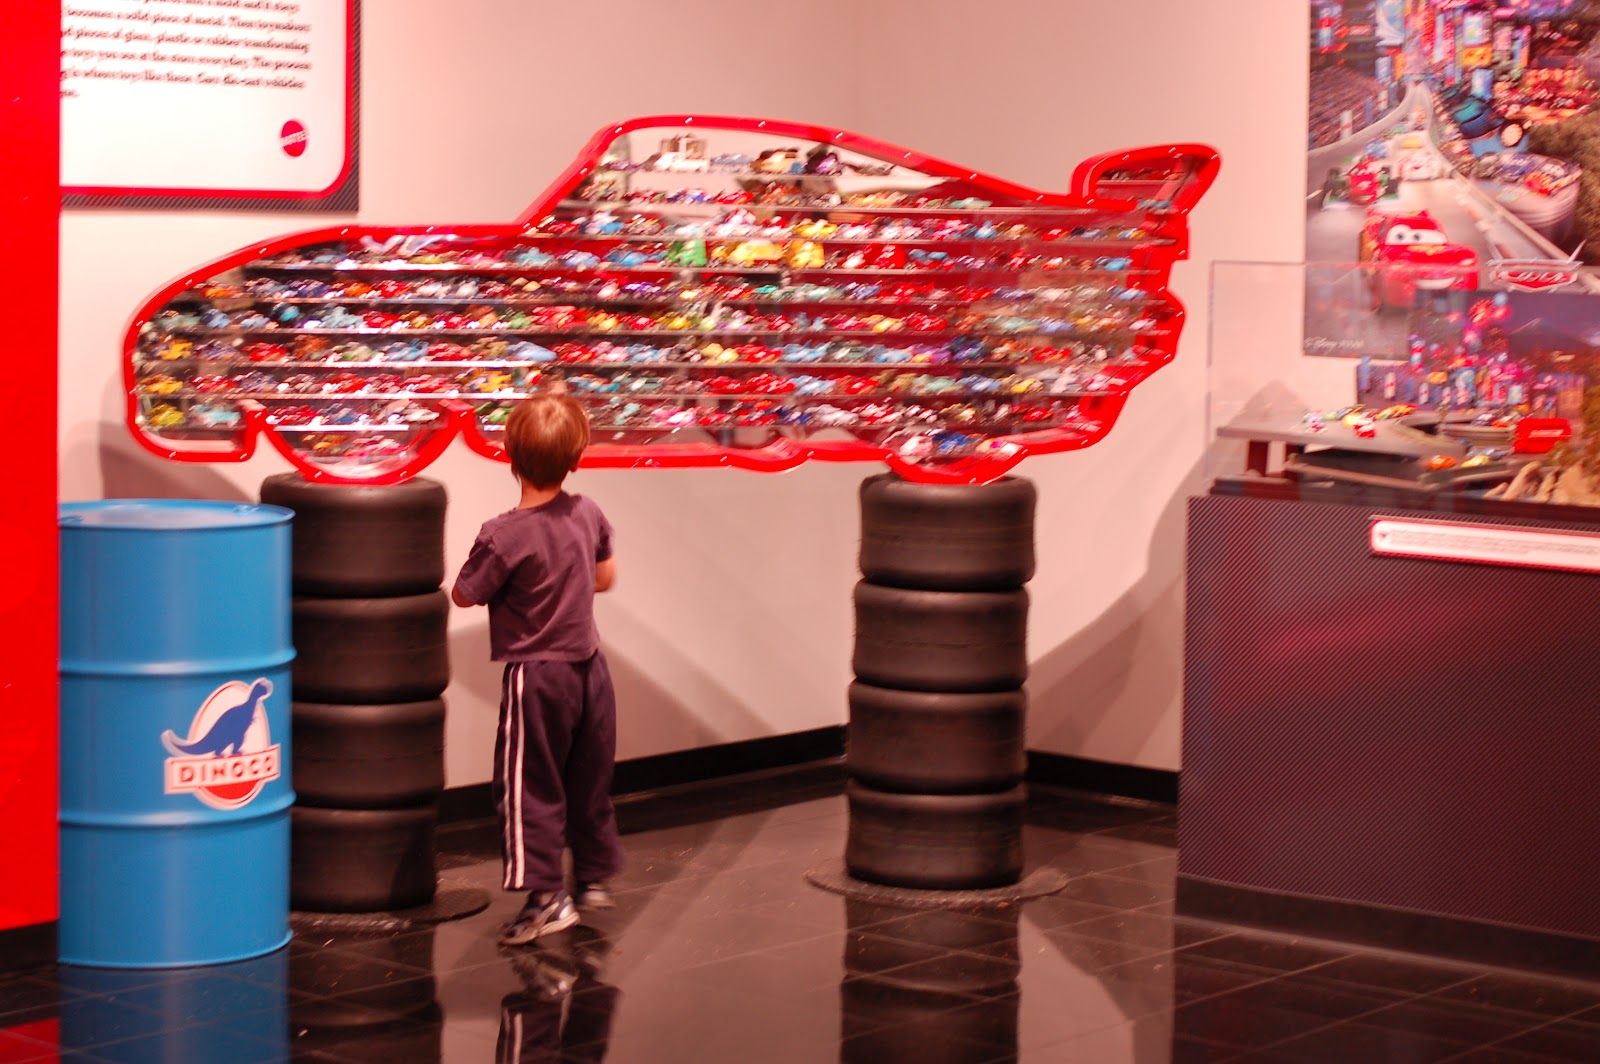 Disney Sisters: Disney Pixar Cars Exhibit at Petersen Automotive Museum